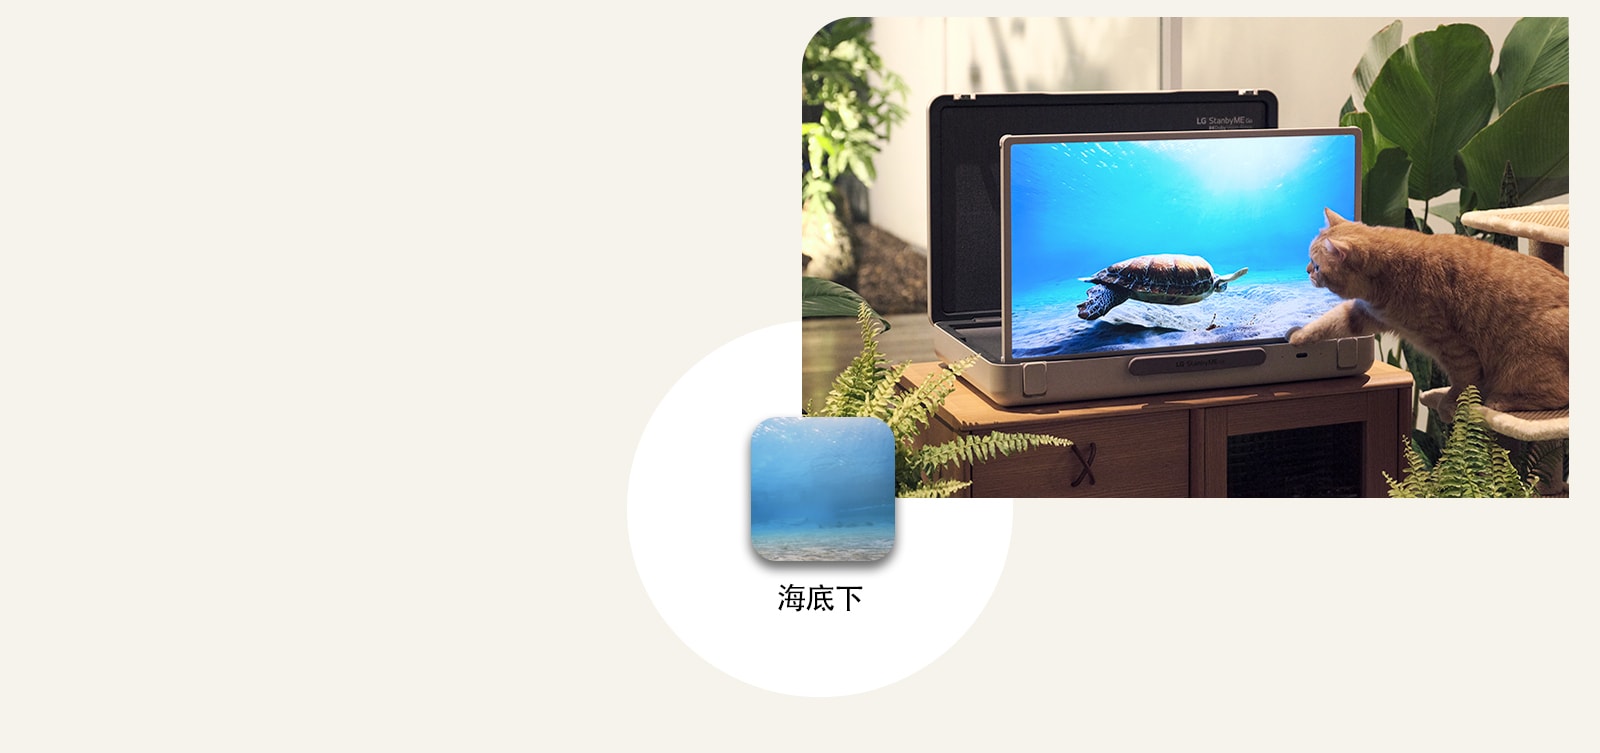 LG StanbyME閨蜜機 Go 放置於花園內，螢幕顯示海底下畫面。在螢幕前方，一隻貓坐在凳子上，嘗試抓螢幕中的烏龜。